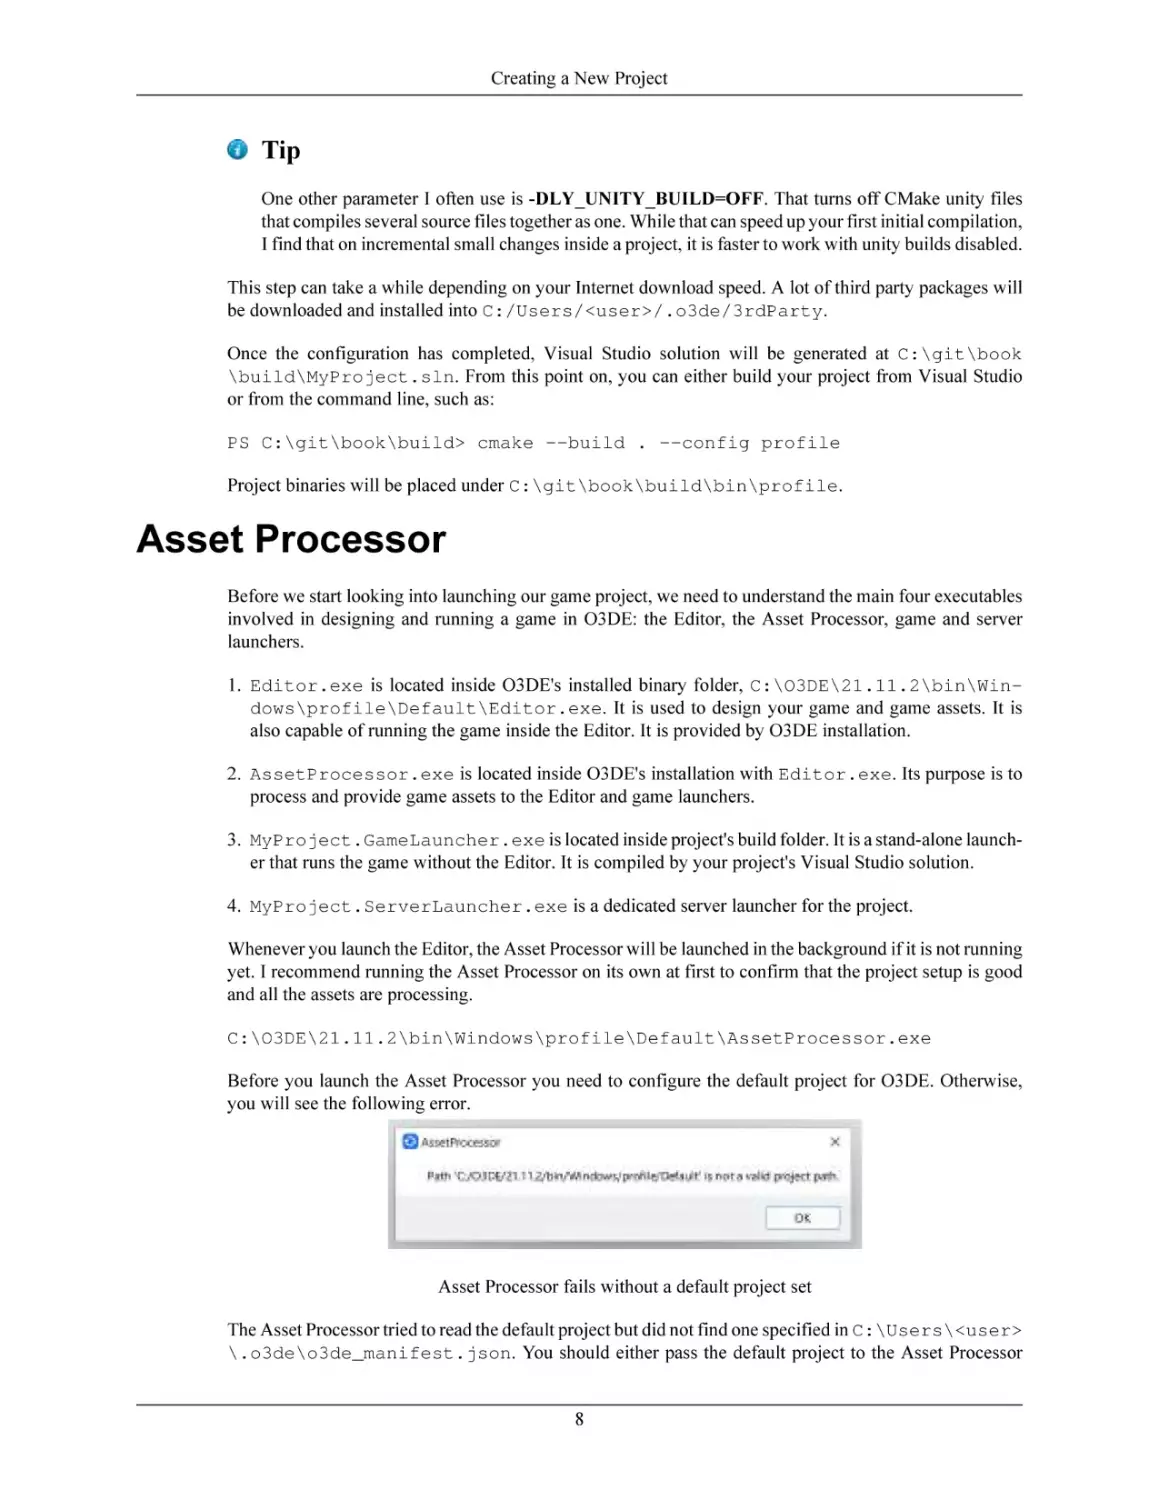 Asset Processor